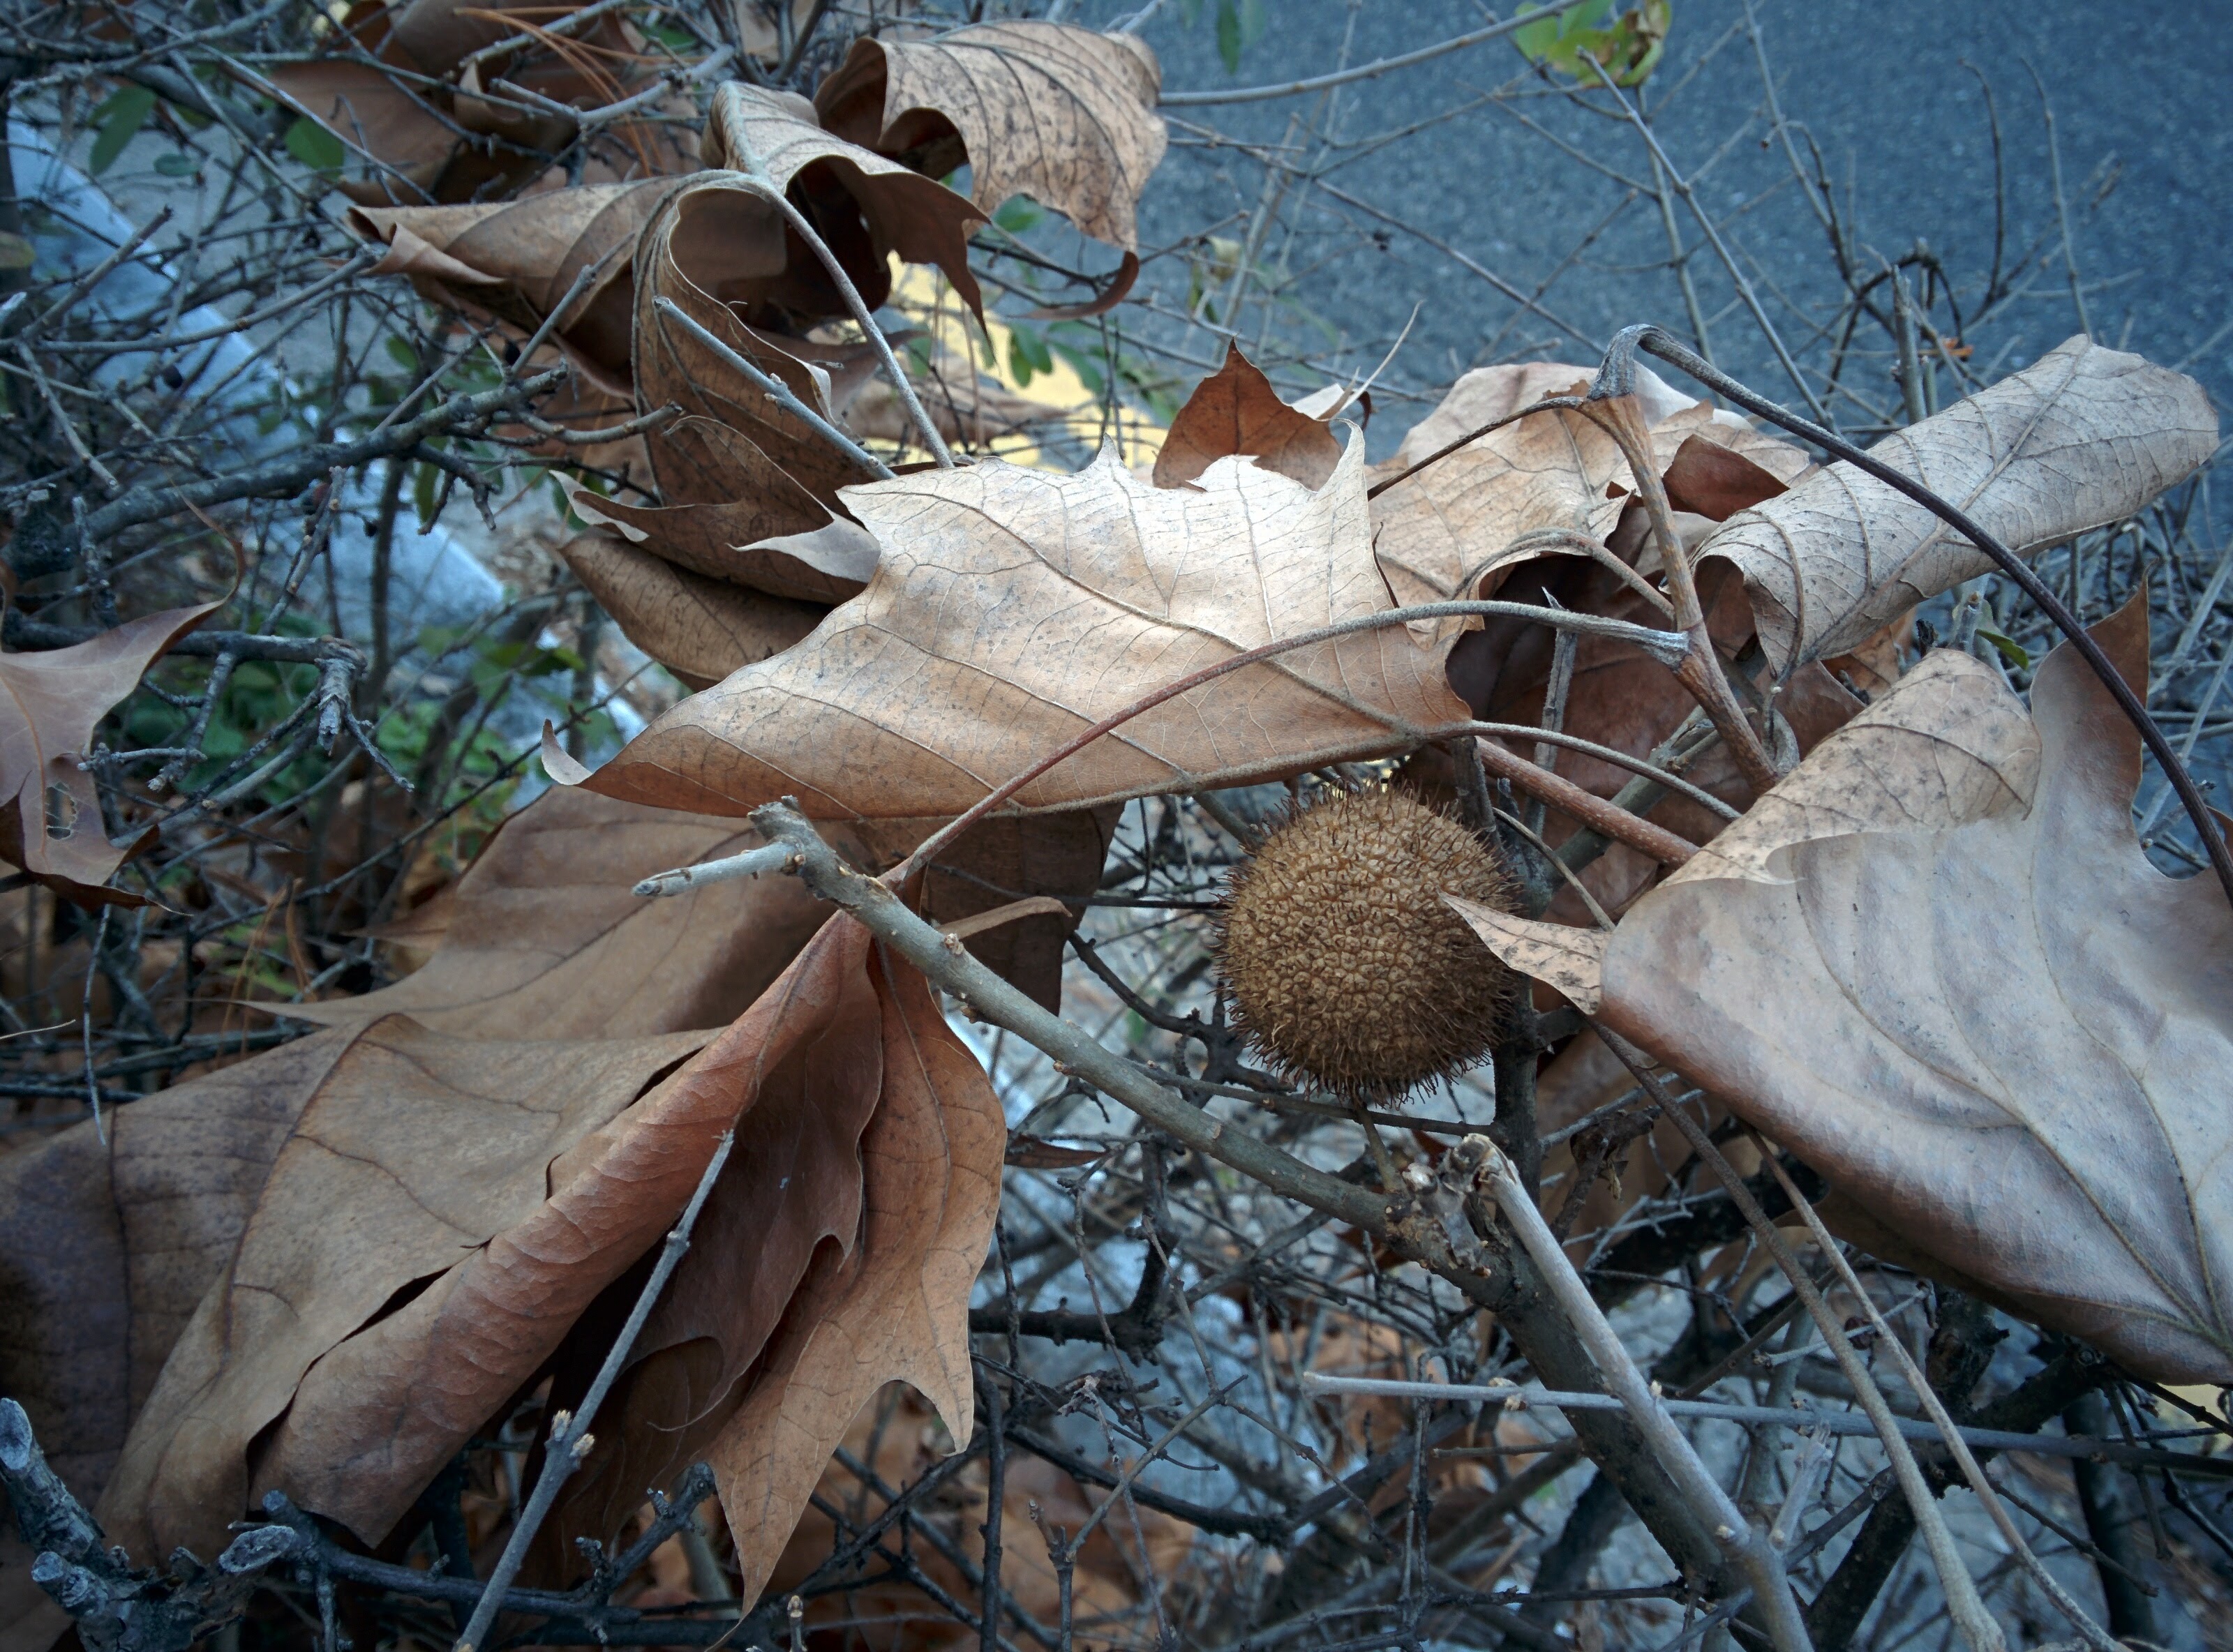 IMG_20151208_160631.jpg 플라타너스(양버즘나무) 열매와 촘촘한 털 속에 숨은 딱딱한 씨앗